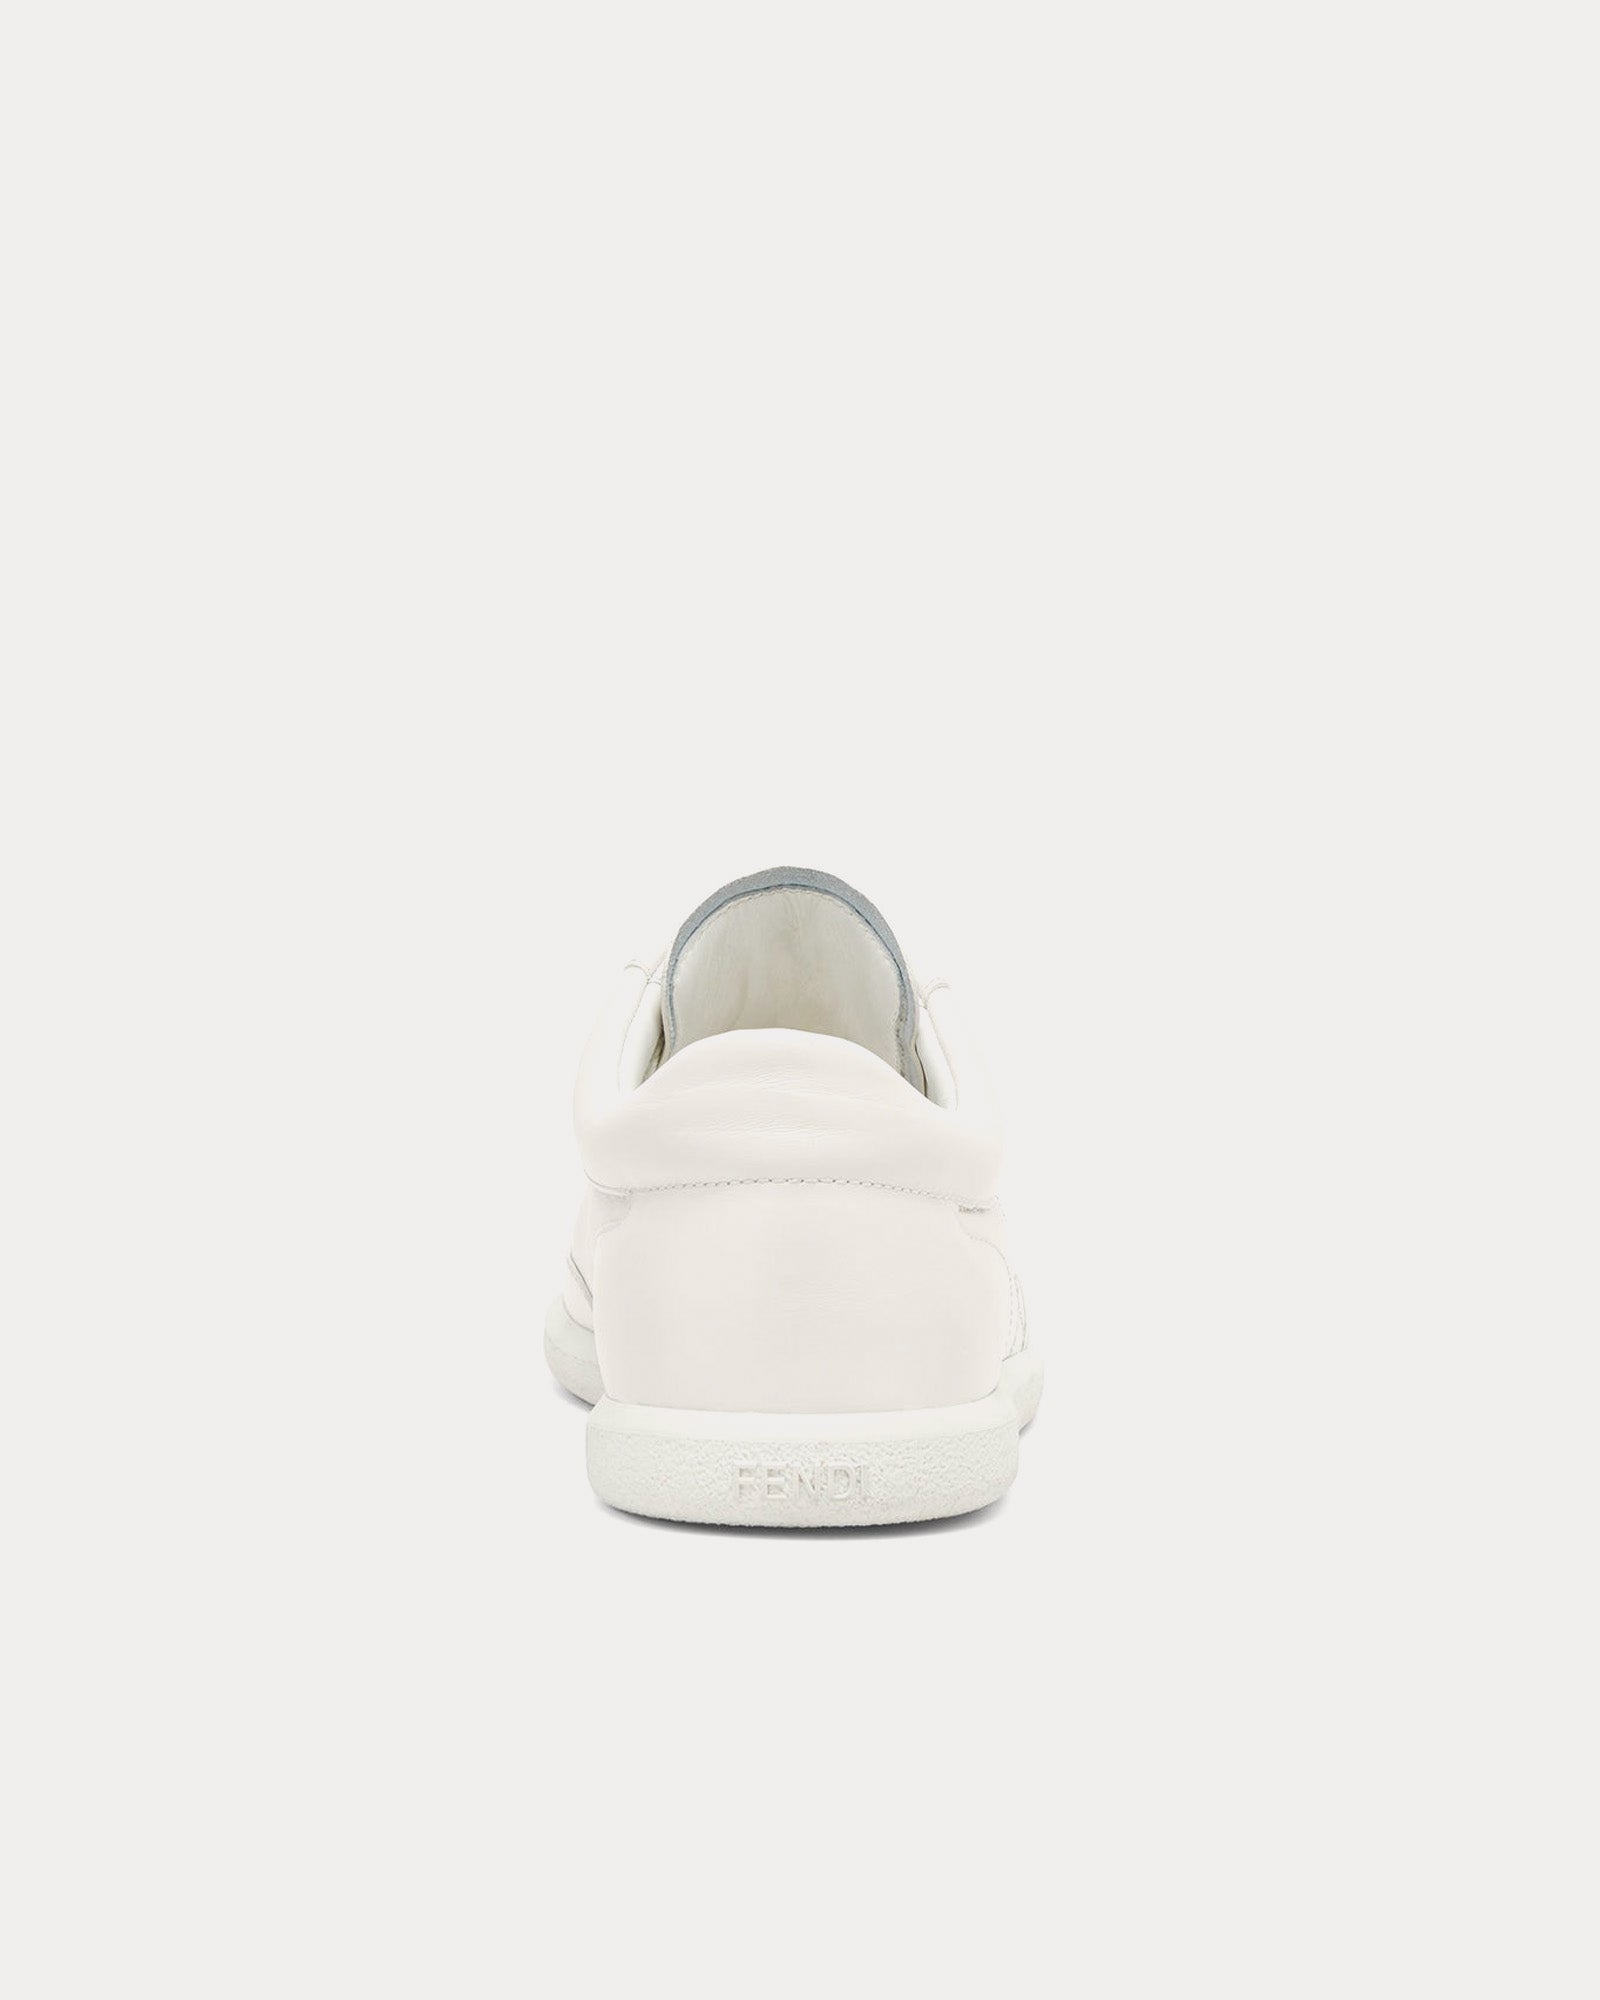 Fendi by Stefano Pilati - Slim Leather White Low Top Sneakers